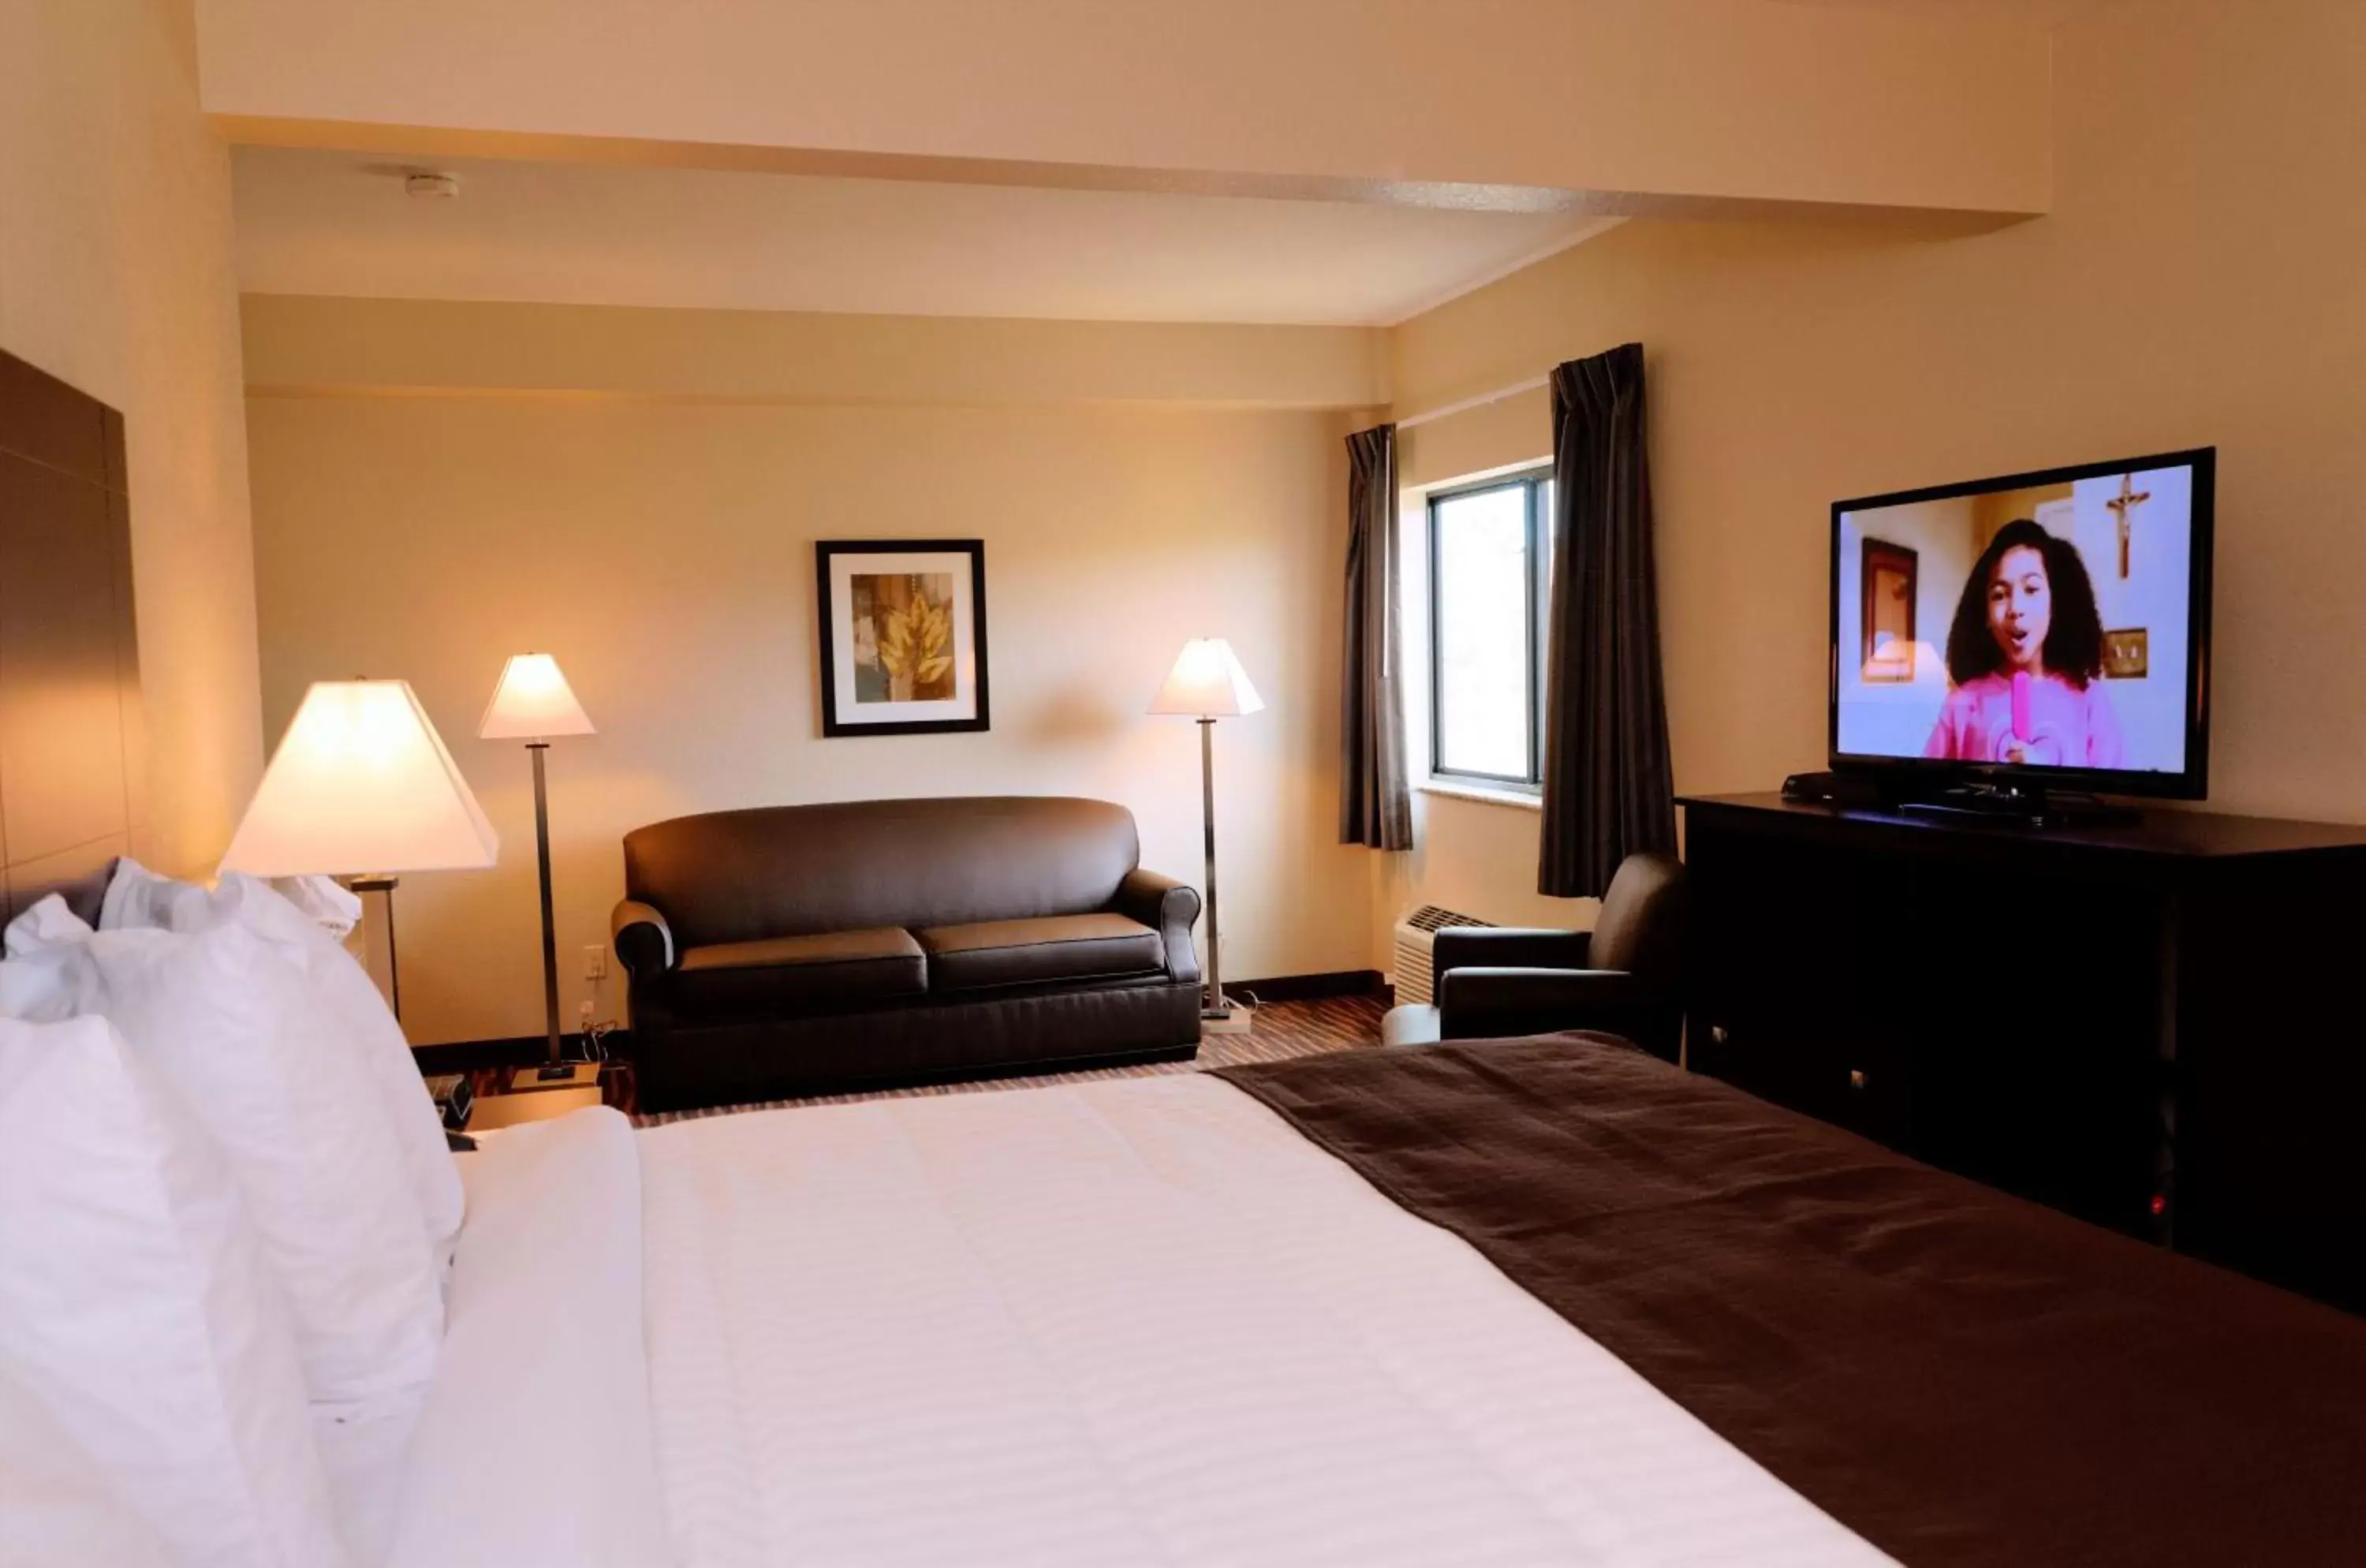 Bed, Room Photo in Cobblestone Inn & Suites - Holstein